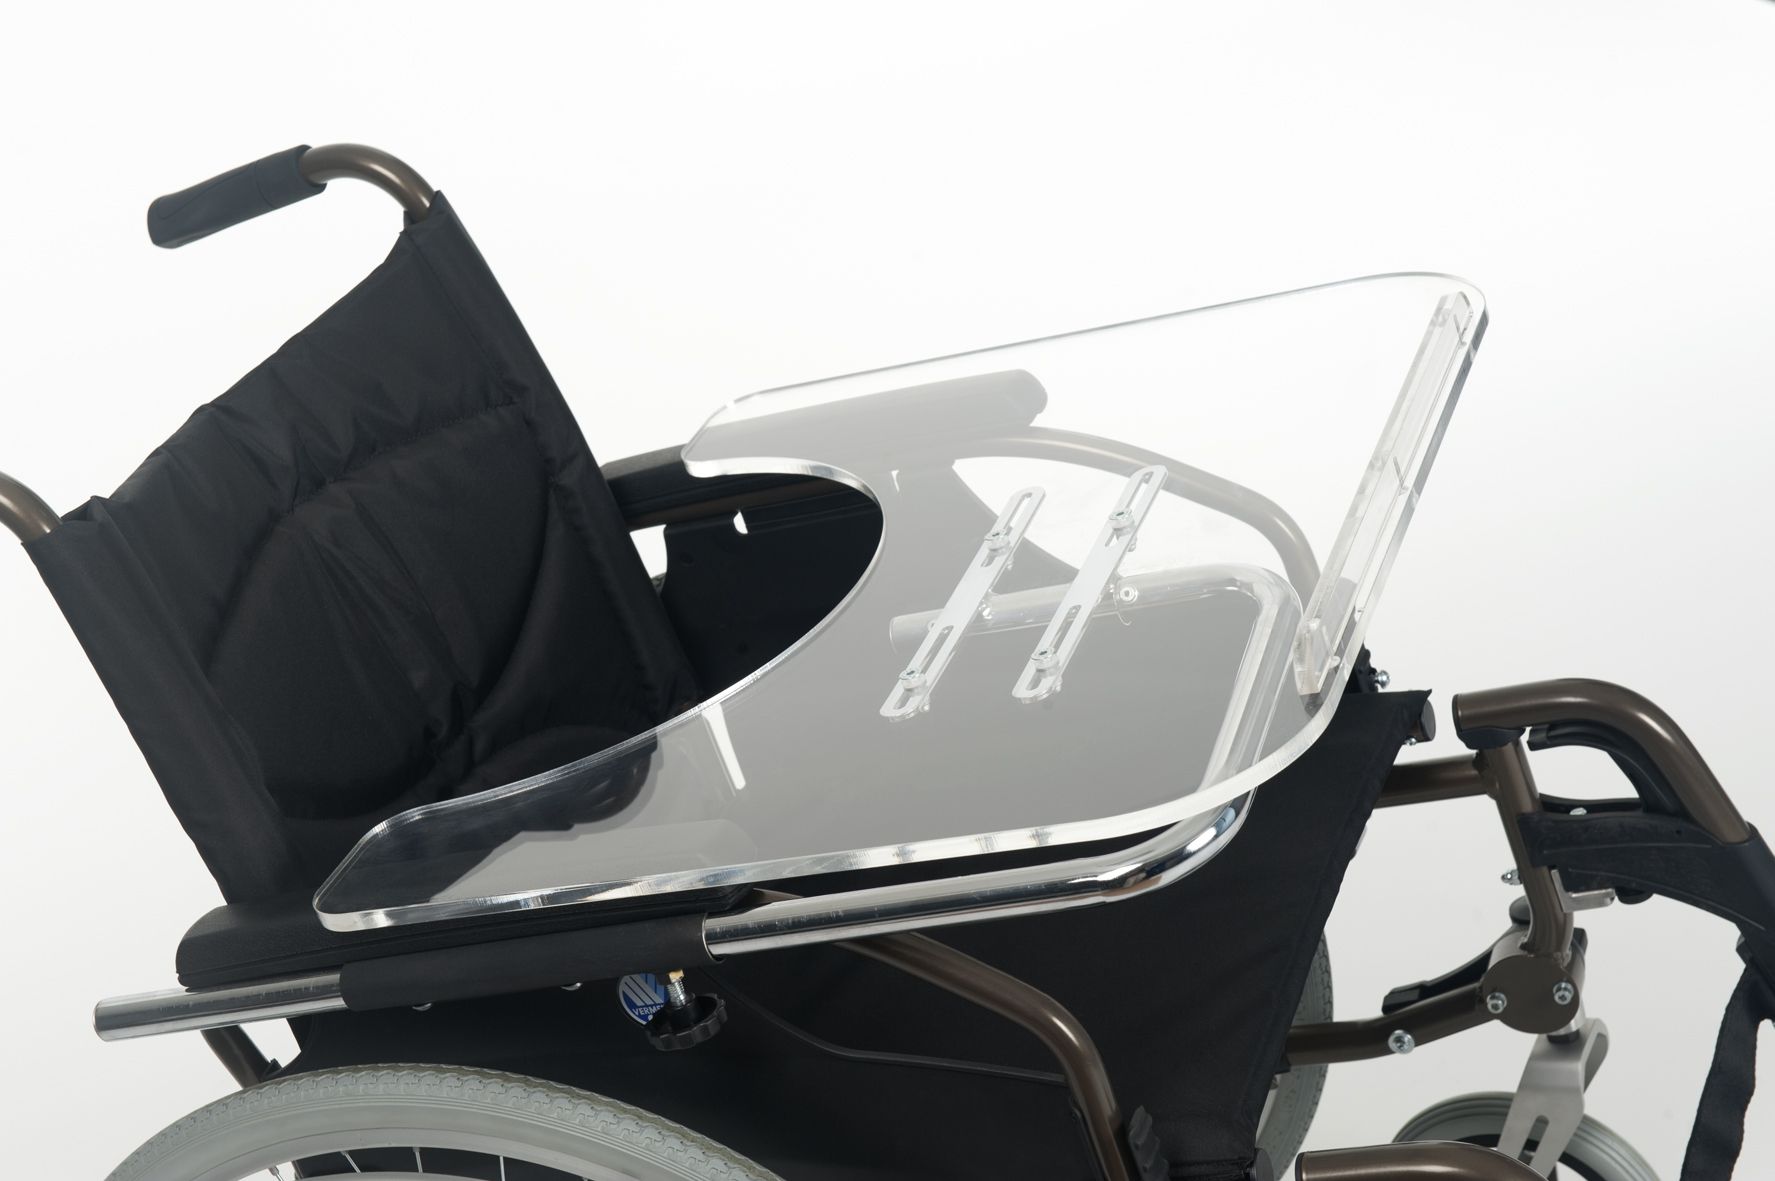 Manually Propelled Wheelchair V100 XXL Vermeiren